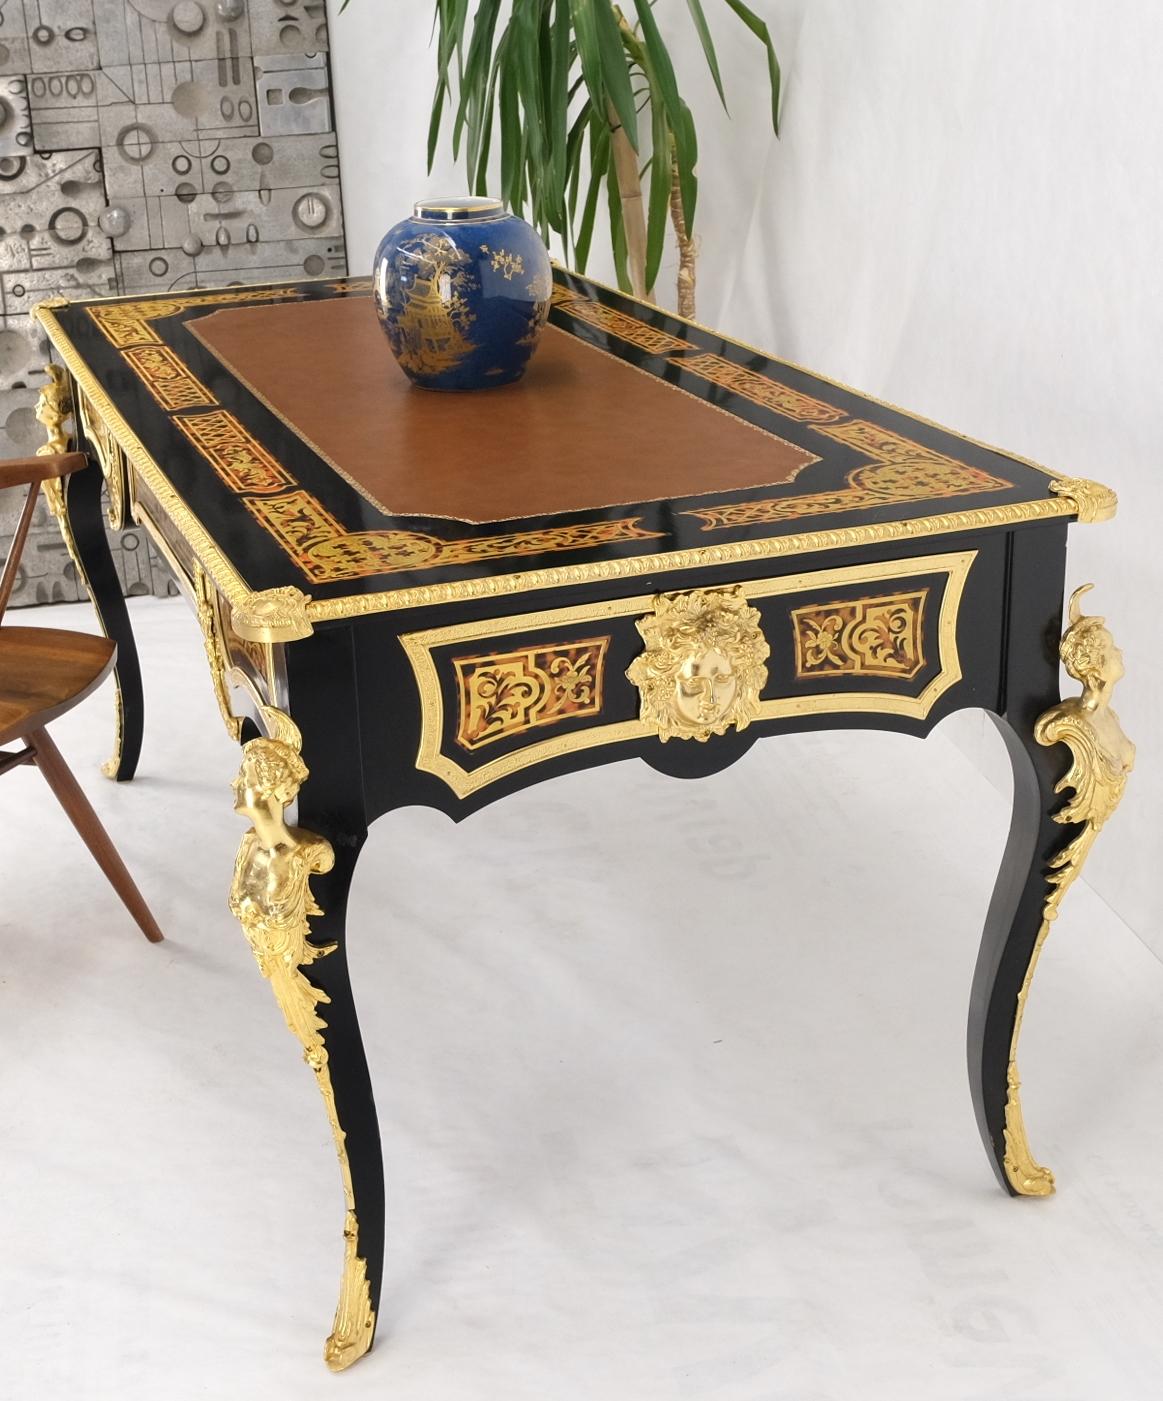 Enamel Decorated French Louis Revival Ormolu Mounted Bureau Desk Table Console  For Sale 6